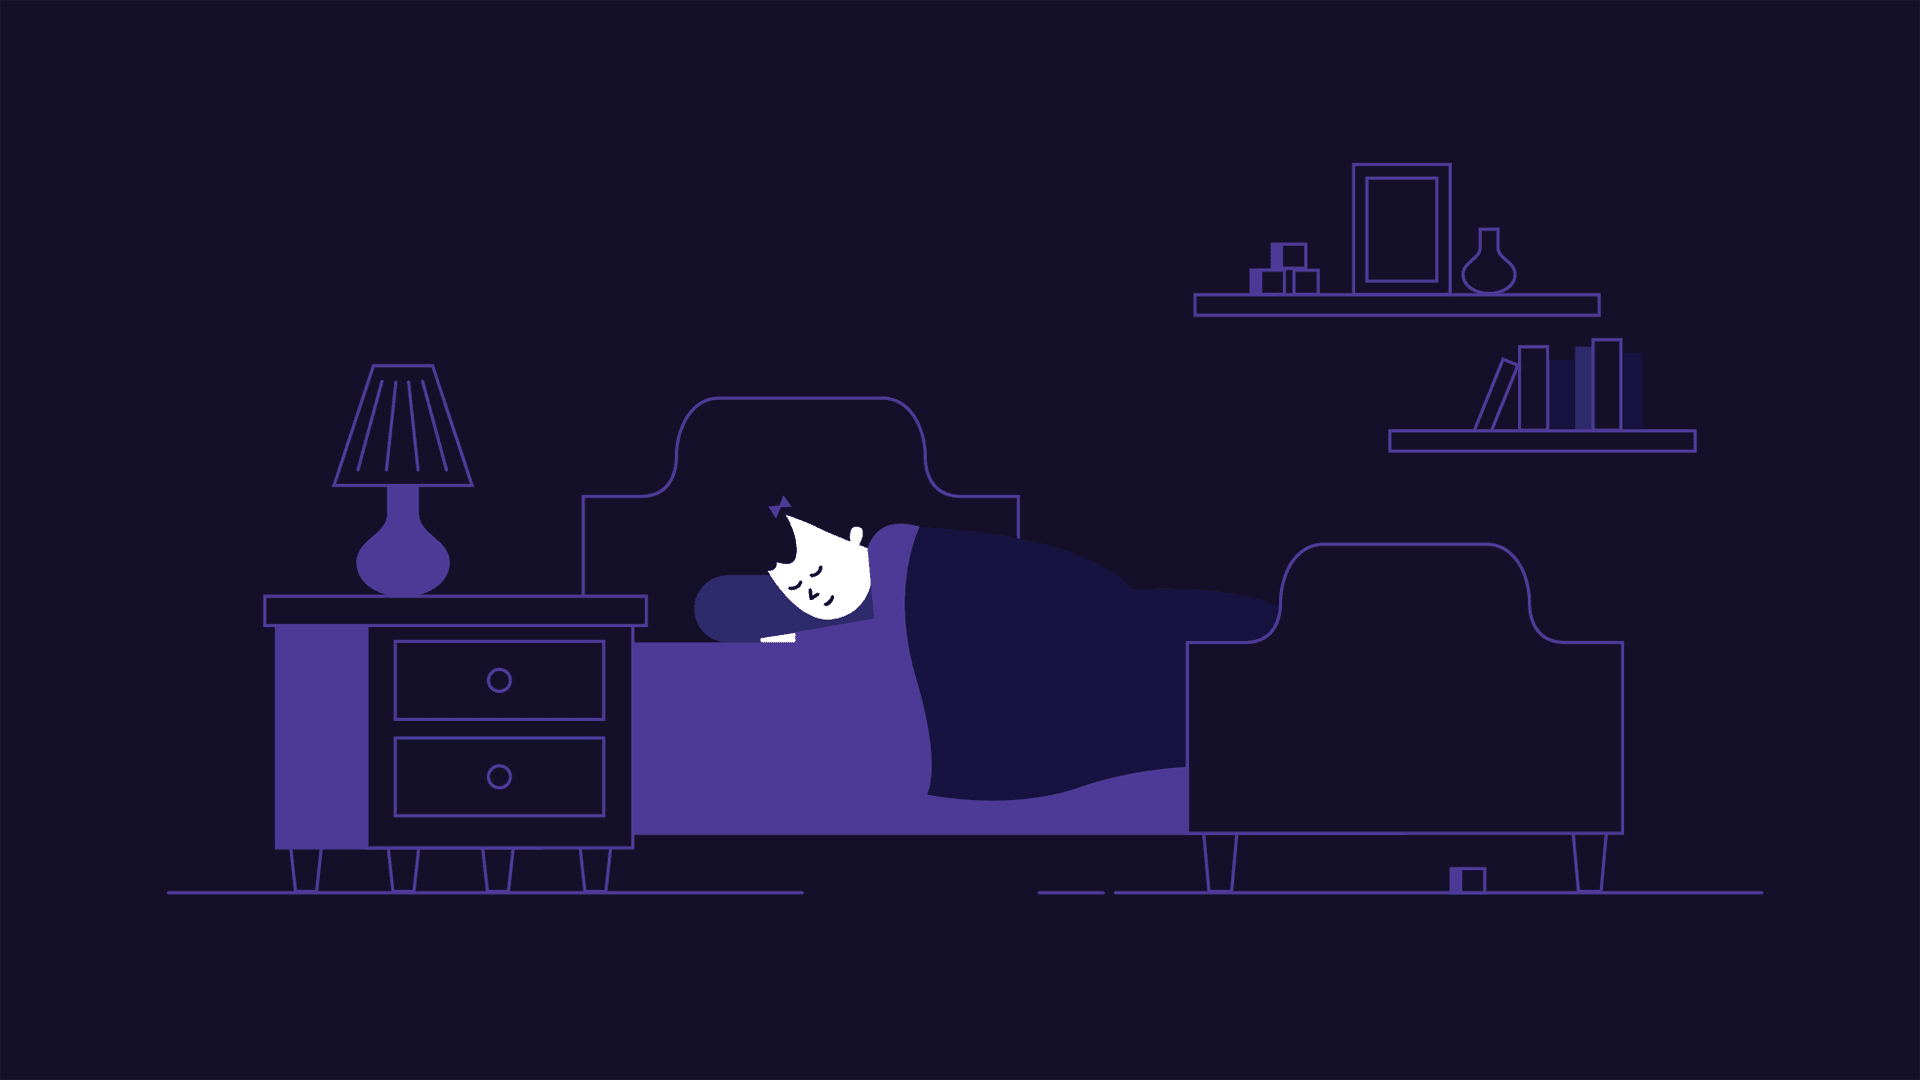 Napping illustration